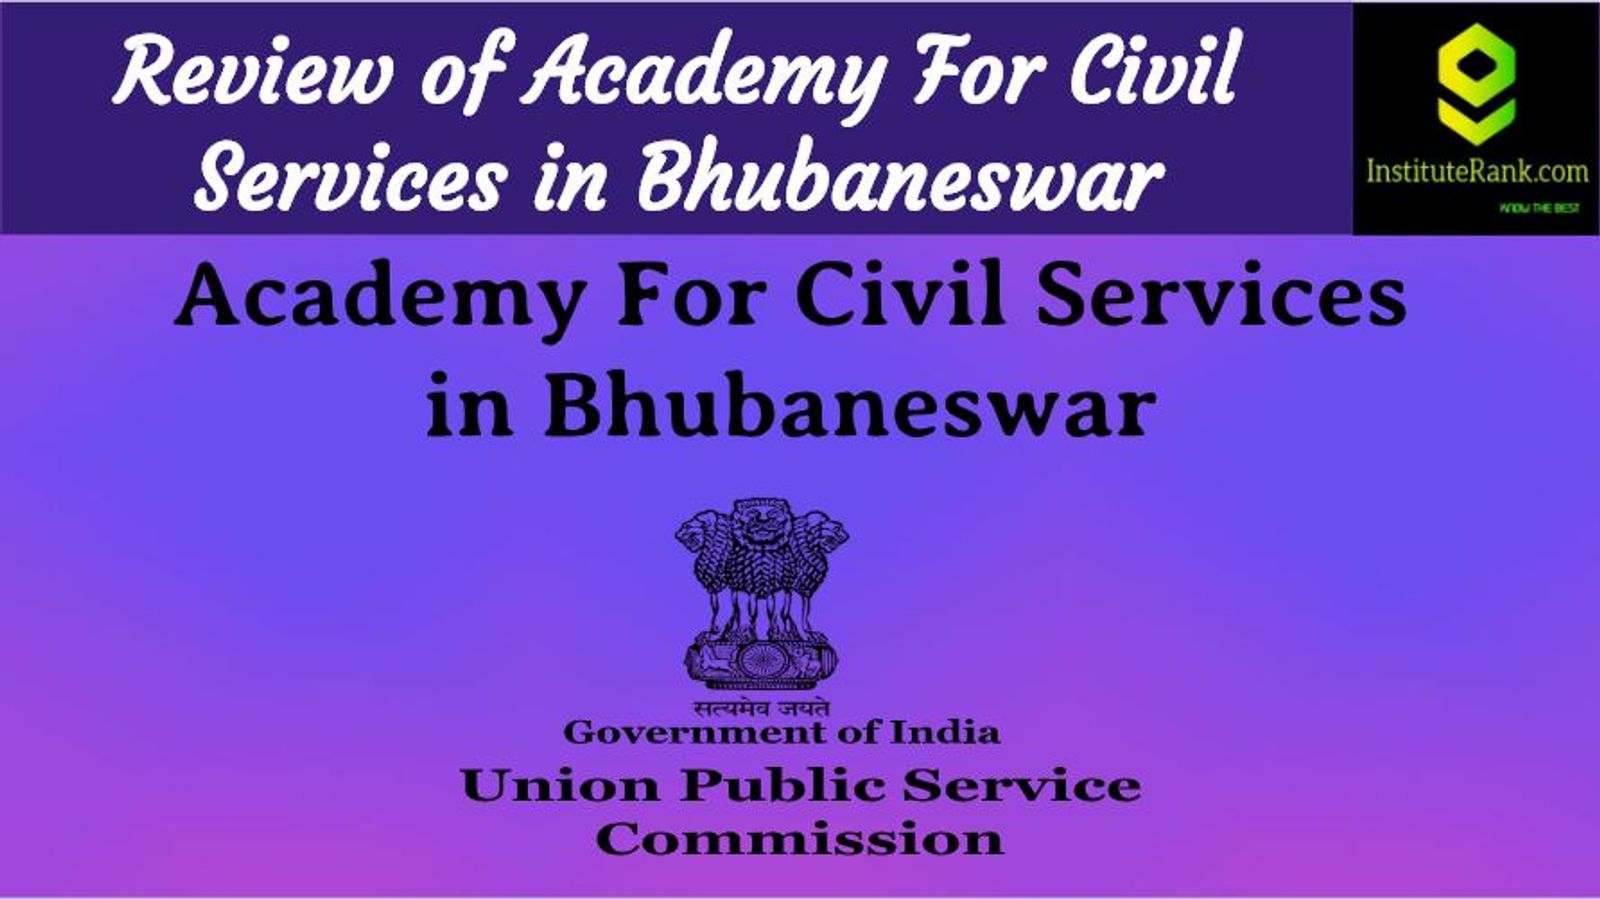 IAS Coaching in Bhubaneswar Reviews